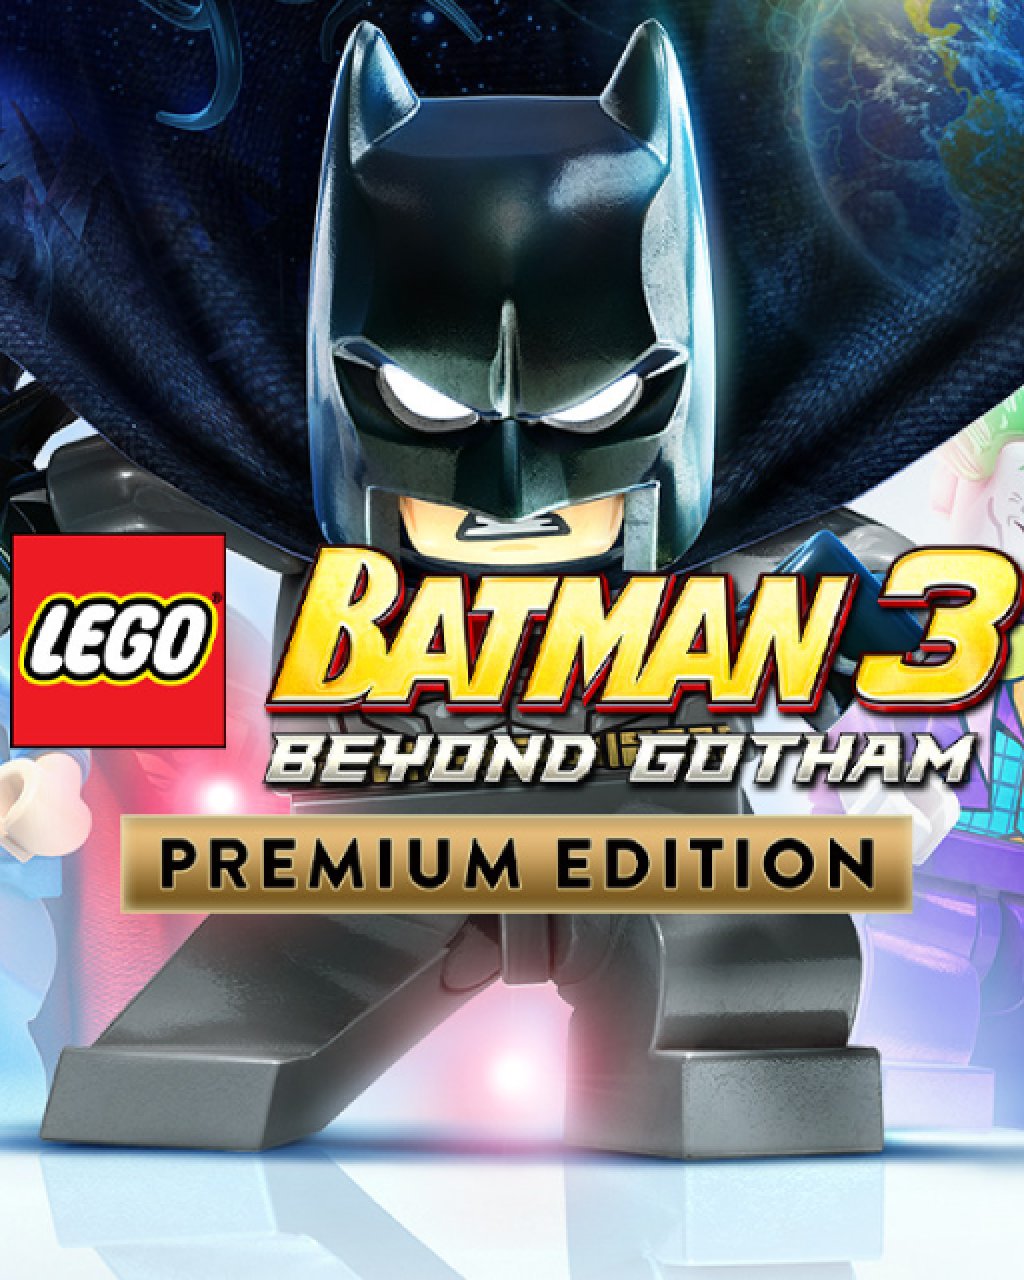 LEGO Batman 3 Beyond Gotham Premium Edition